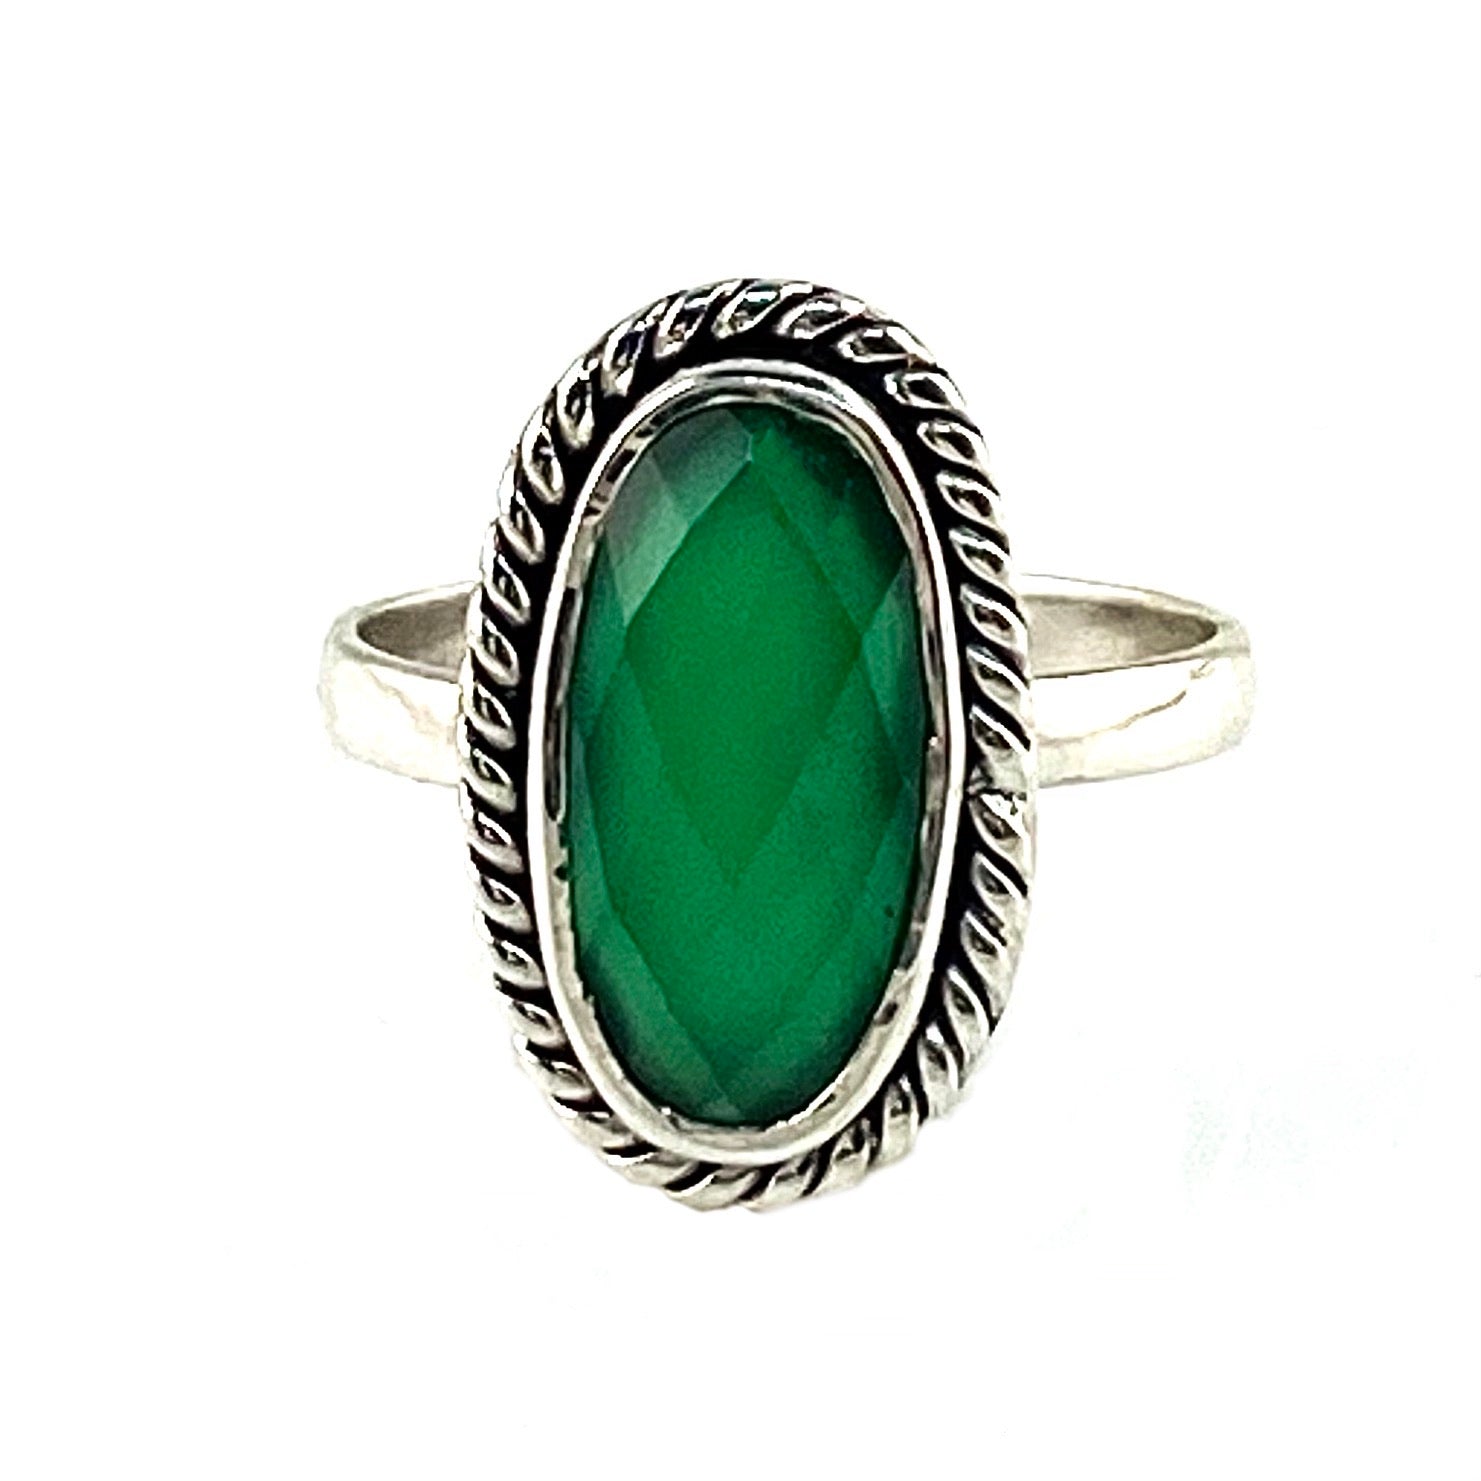 Green Onyx Sterling Silver Ring - Keja Designs Jewelry